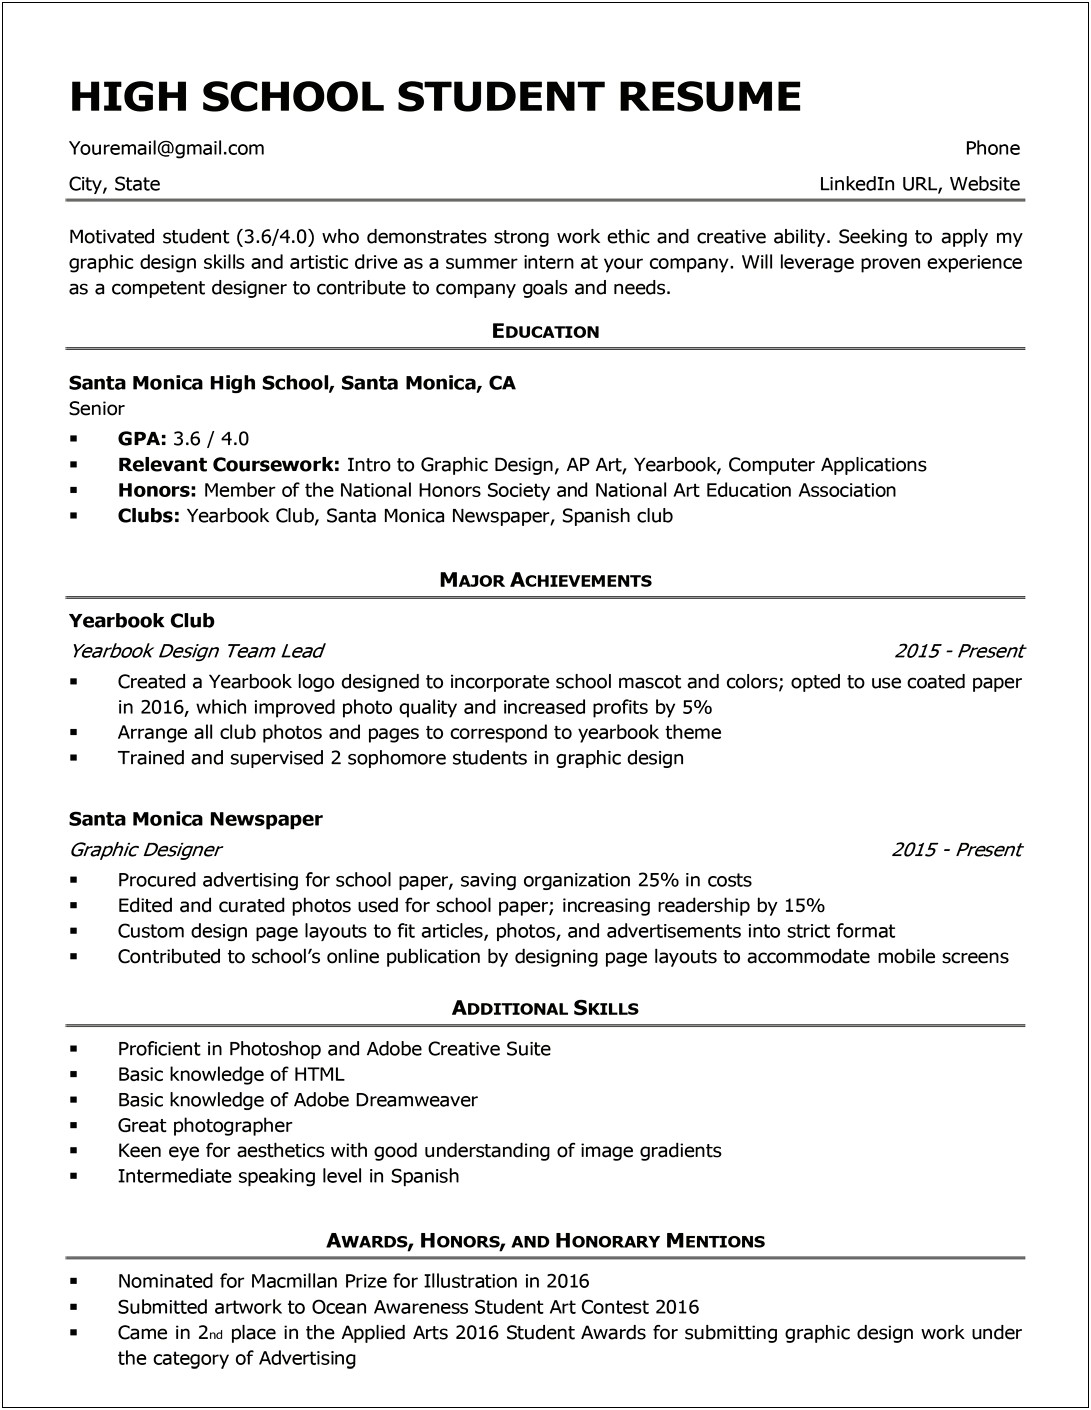 Plain Text Version Of Resume Sample